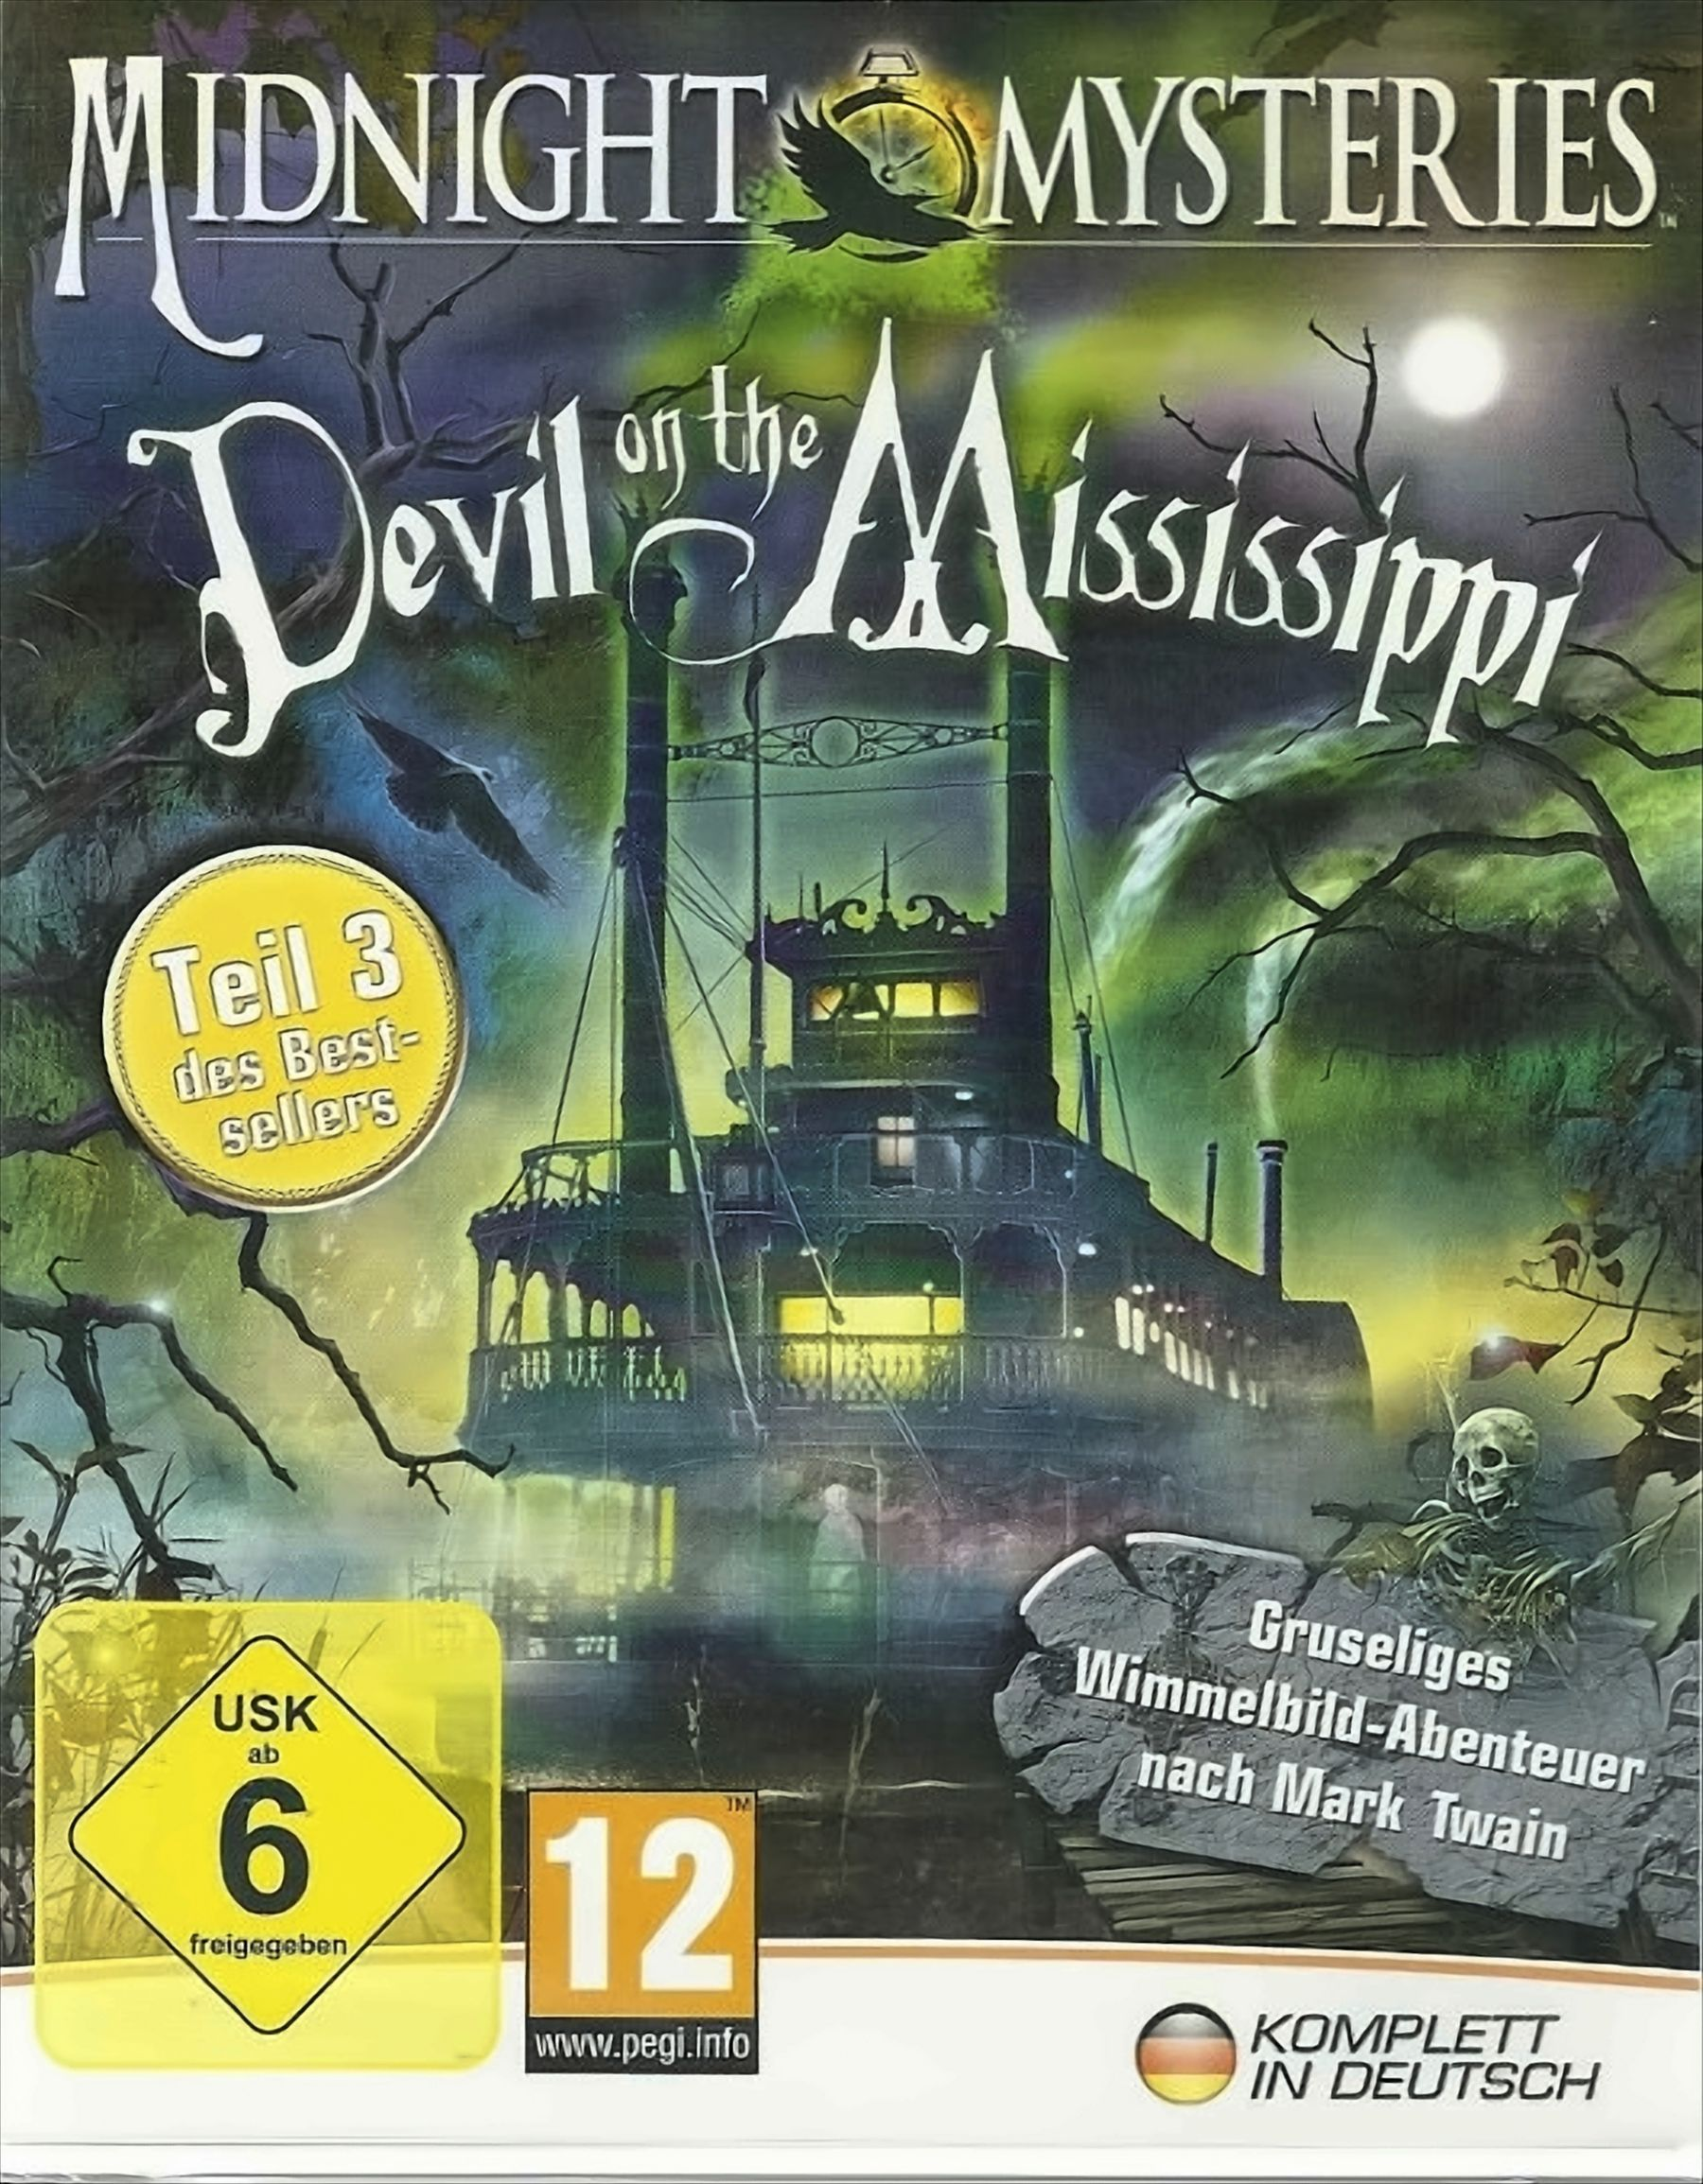 [PC] On Mississippi Devil Midnight The Mysteries: -